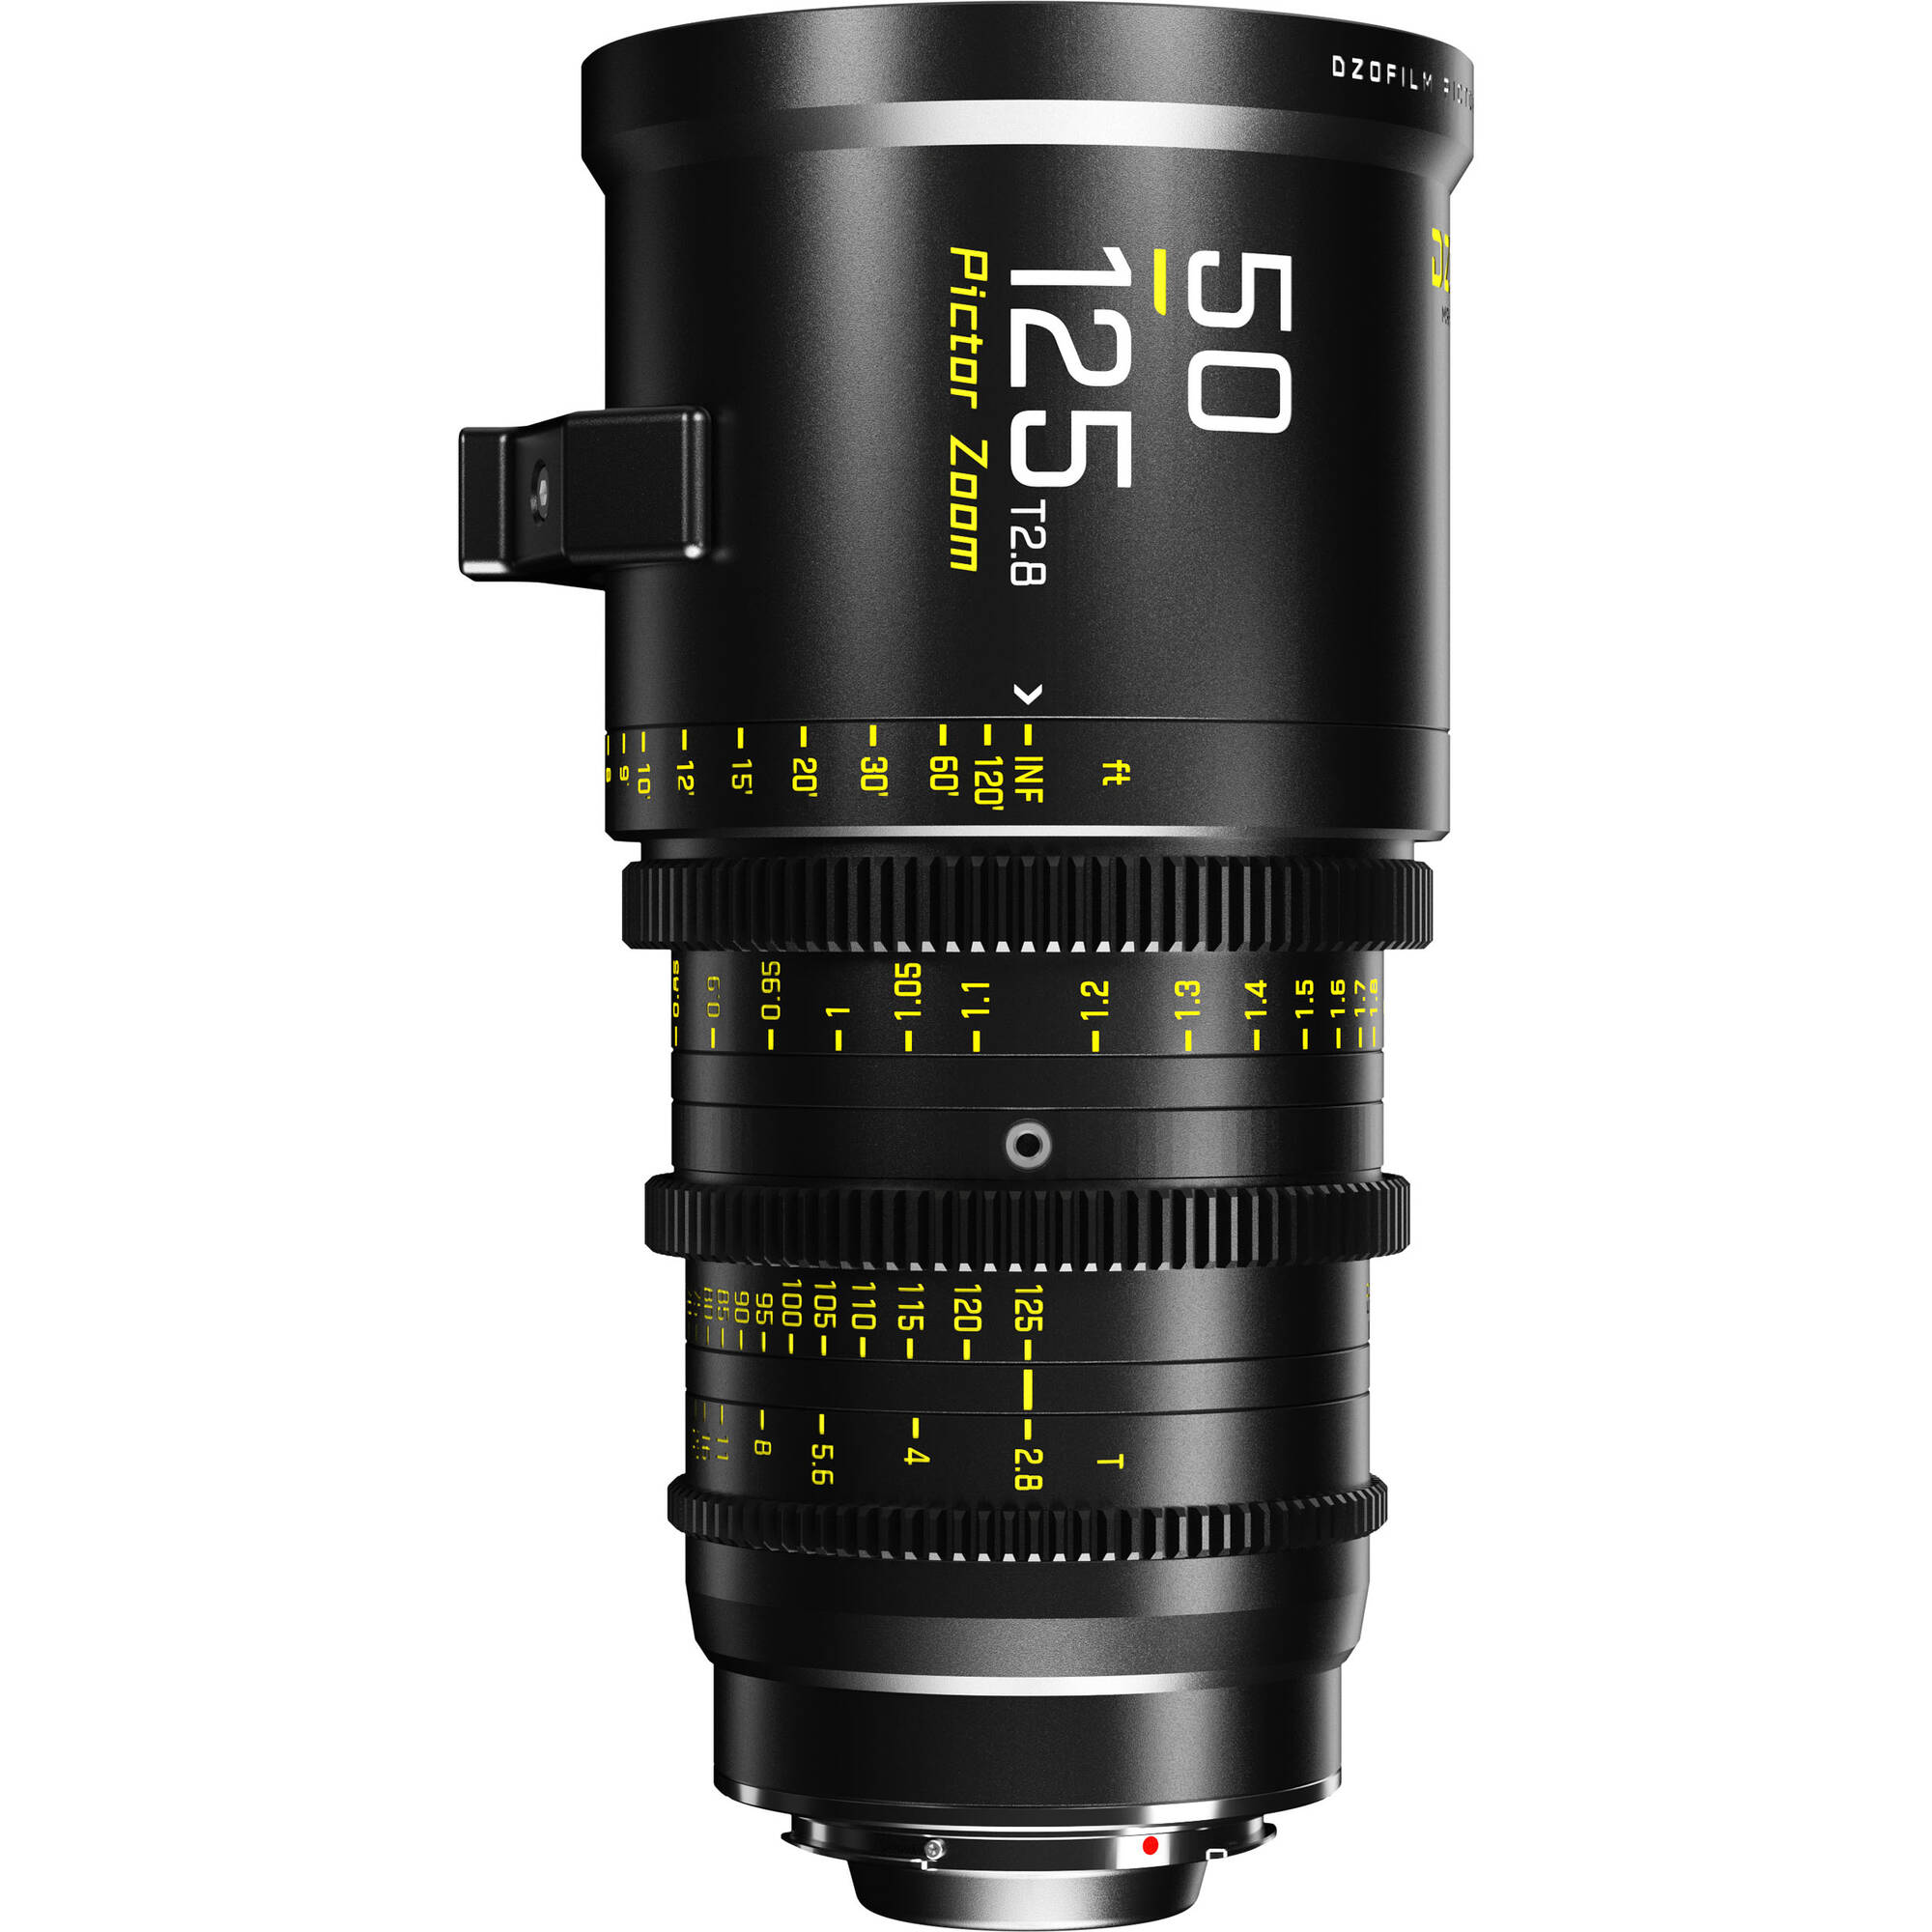 Lente zoom parfocal DZOFilm Pictor de 50 a 125 mm T2.8 Super35 (montura PL y montura EF)